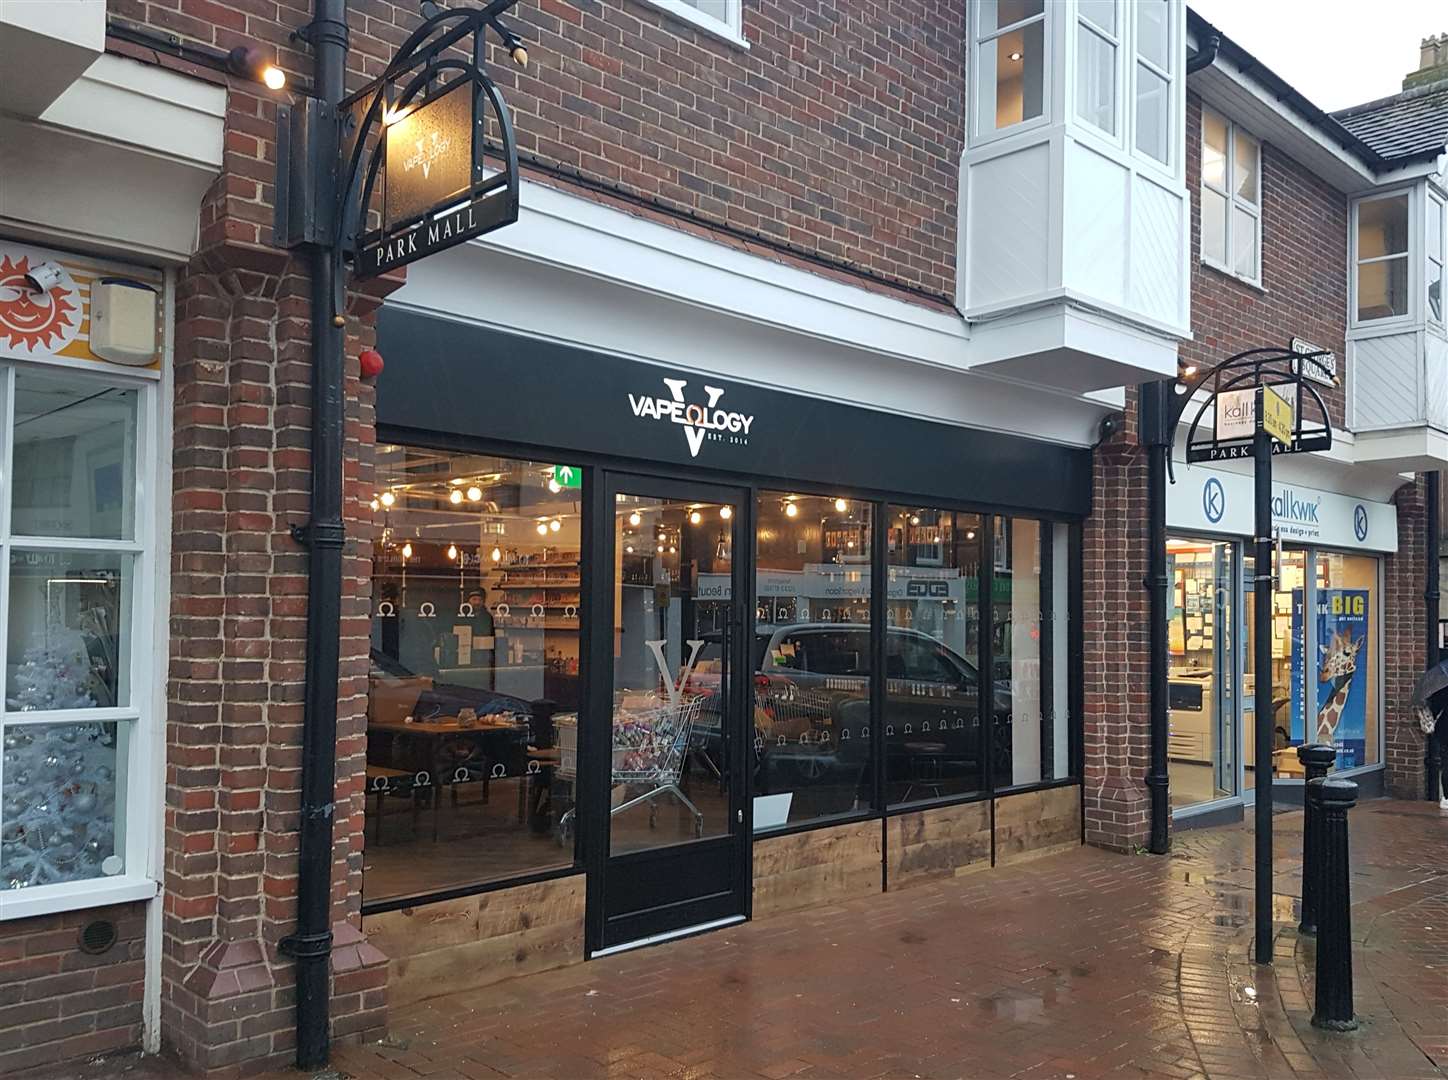 Vapeology's new shop on Castle Street opened today